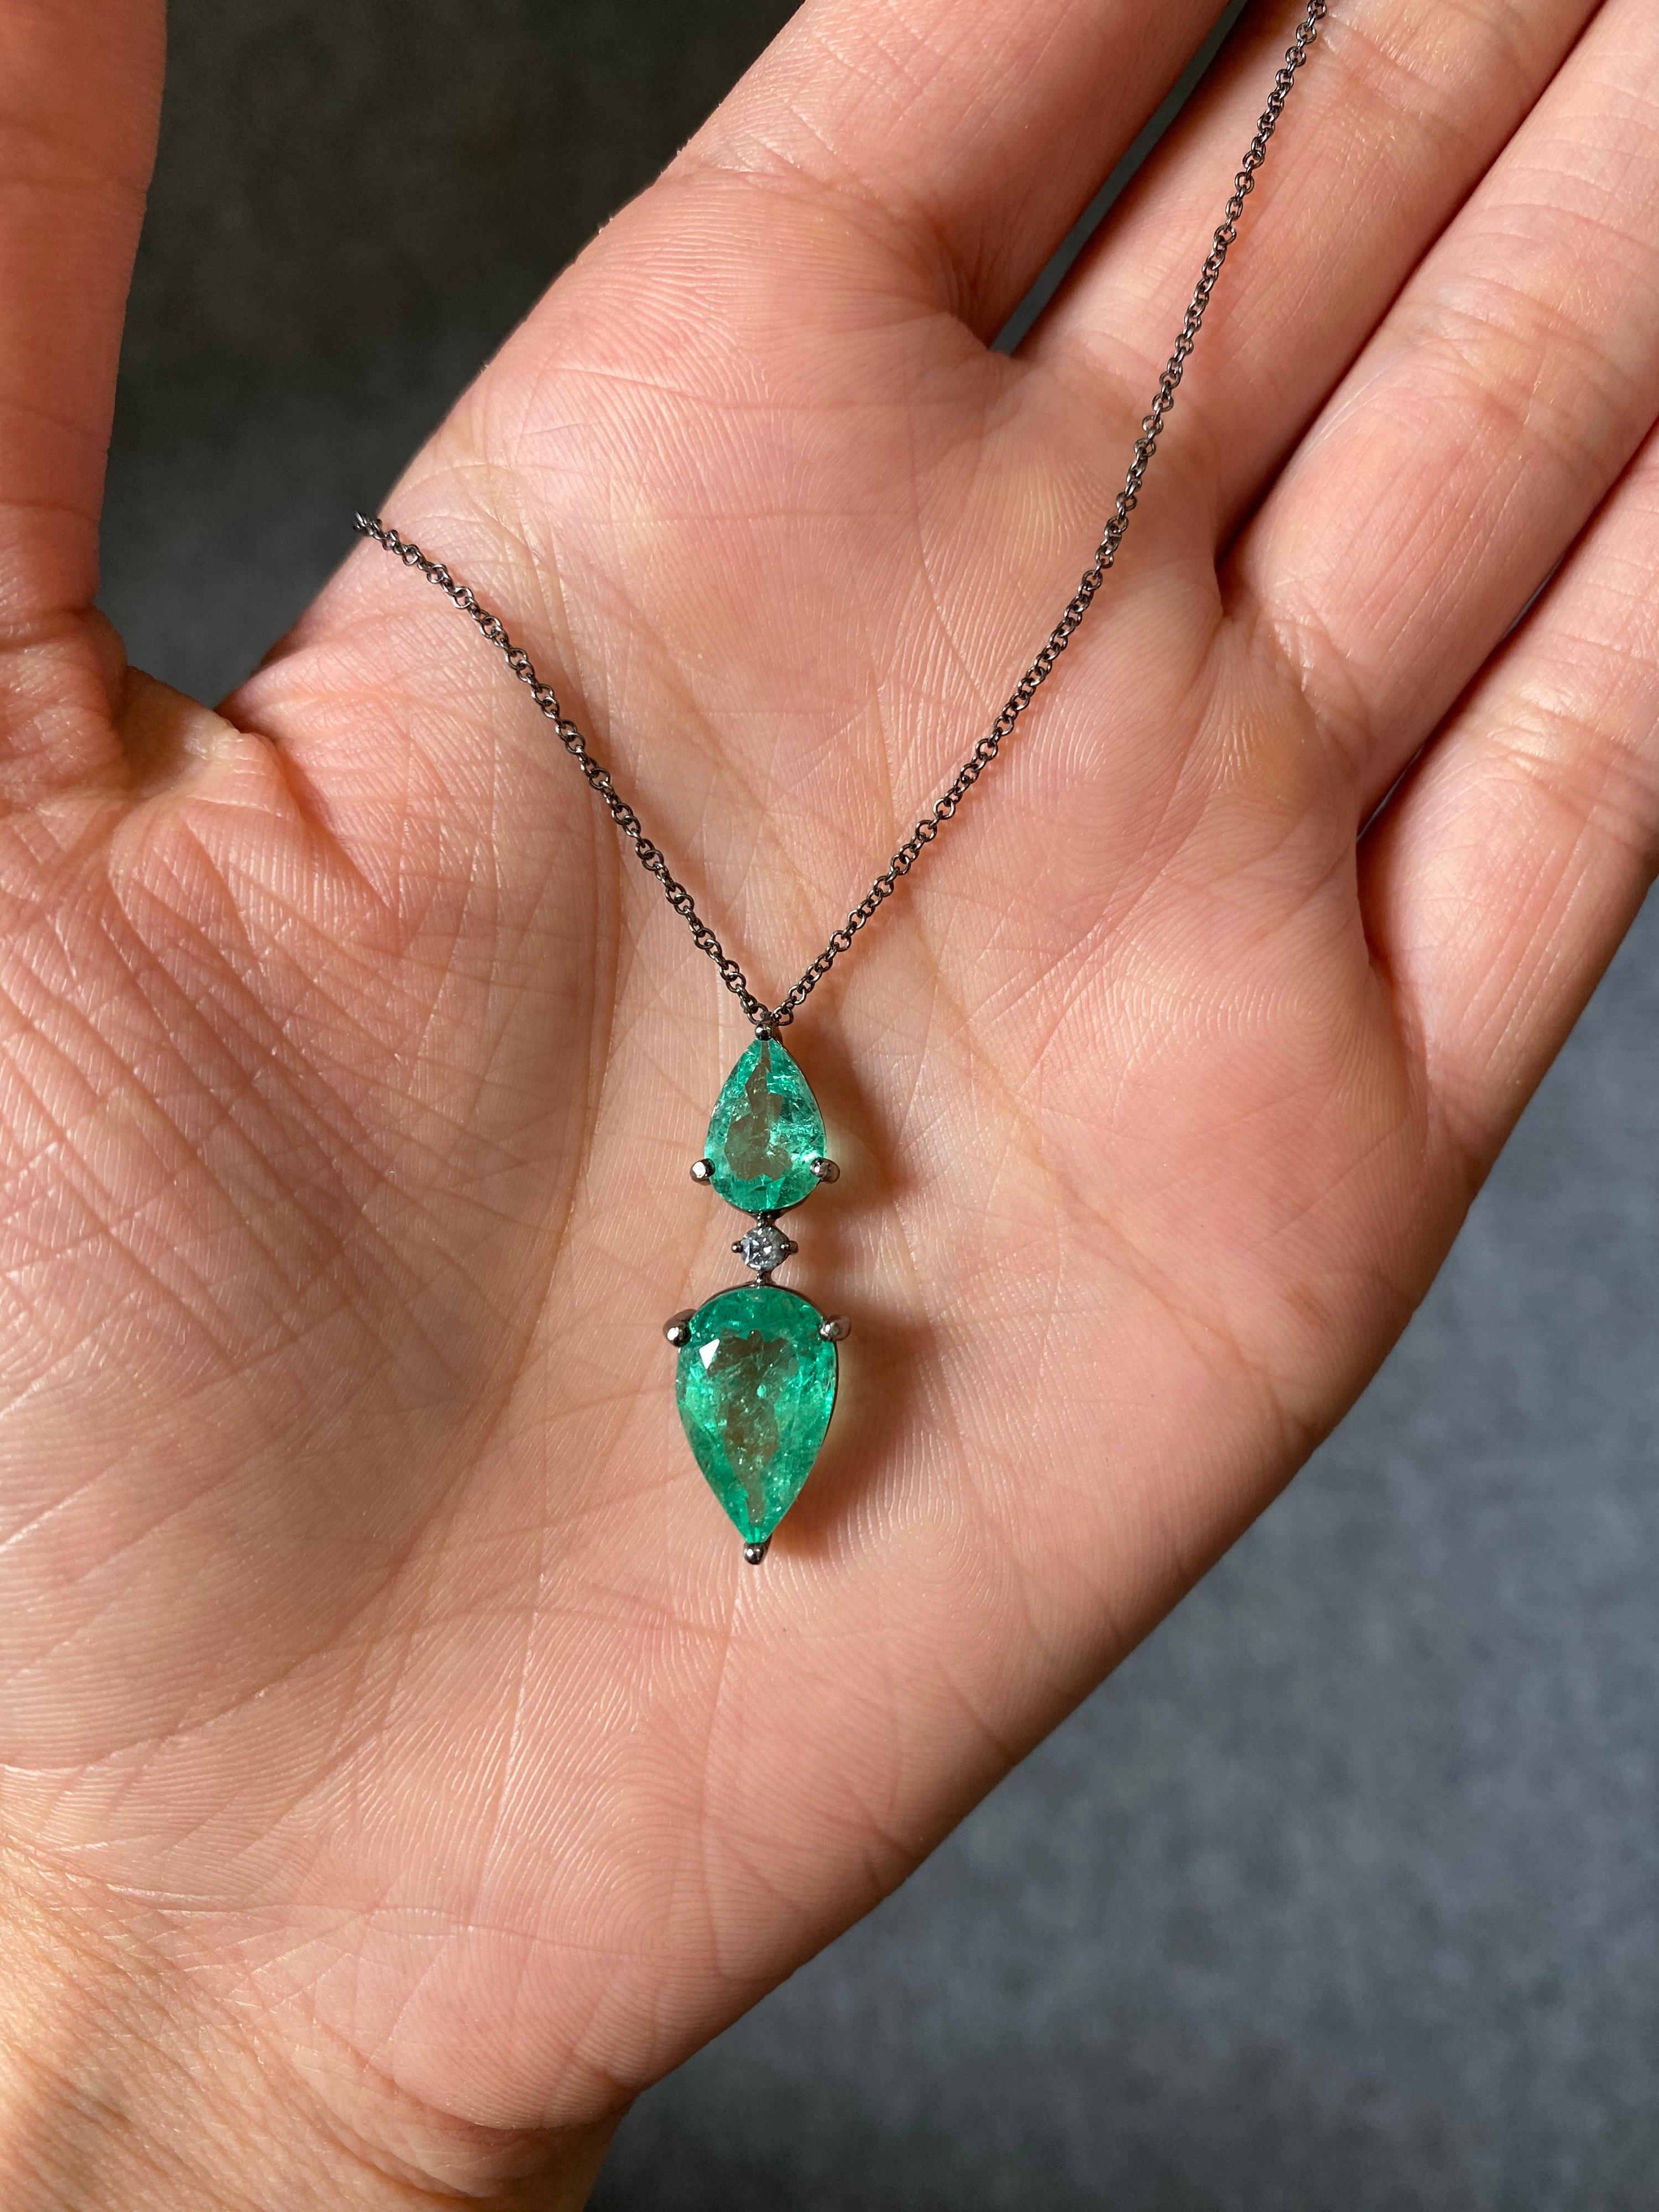 Pear Cut 3.87 Carat Pear Shape Colombian Emerald Pendant Necklace